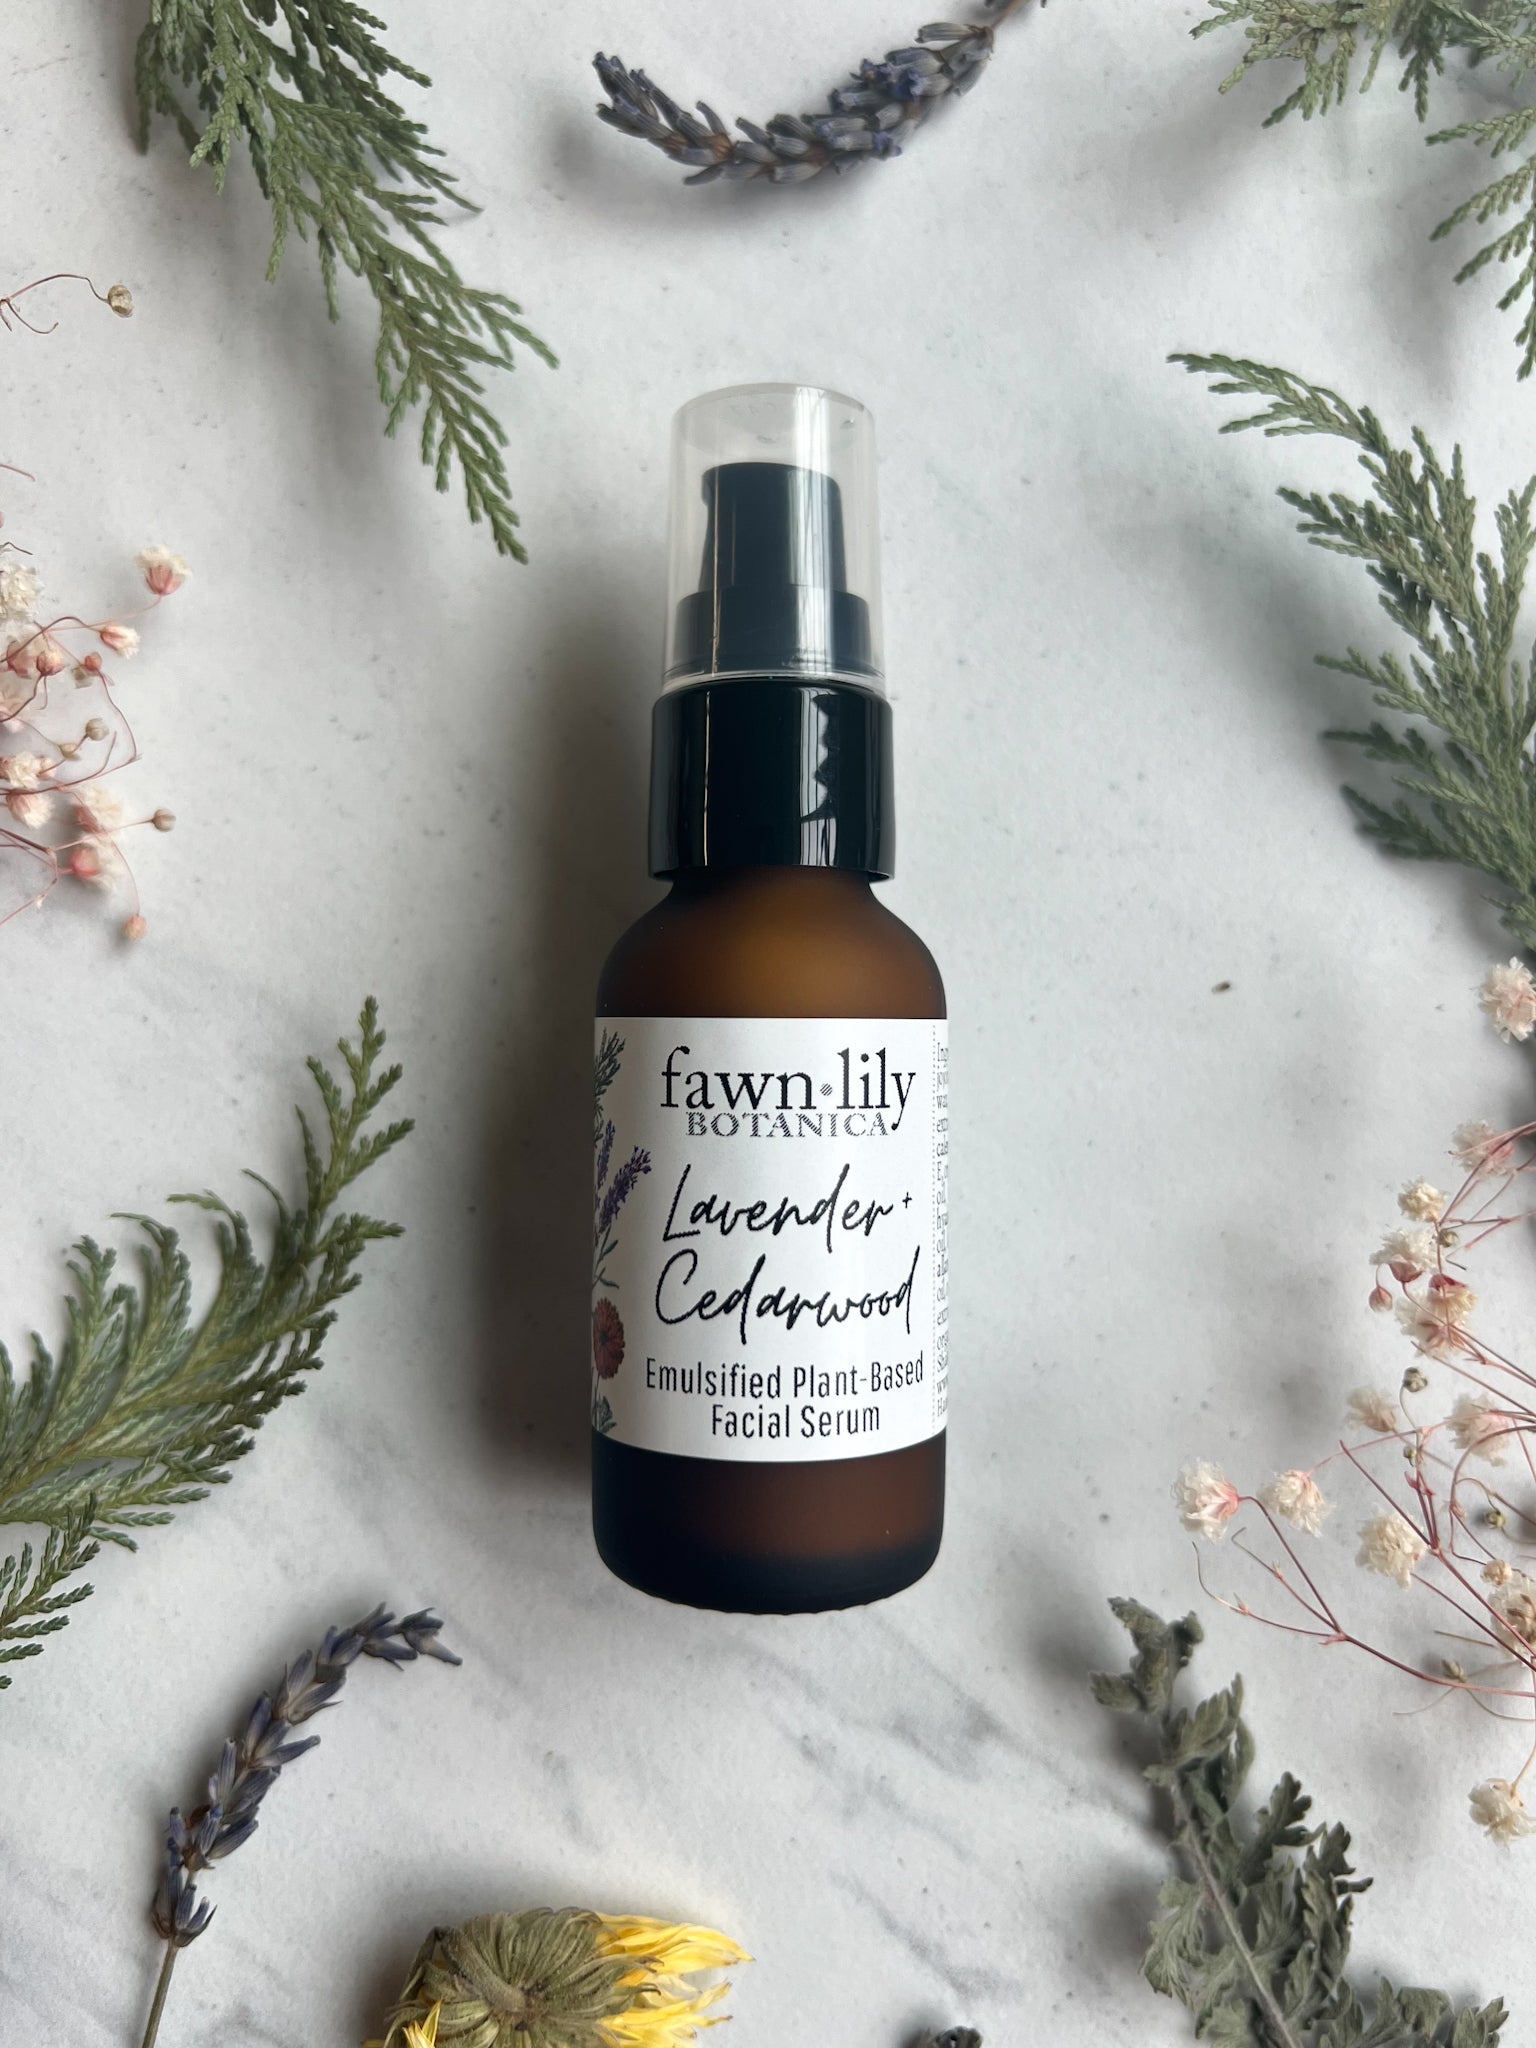 Fawn Lily Botanica | Emulsified Lavender Cedarwood Botanical Facial Serum Cream, vegan, natural, plant-based face moisturizer 